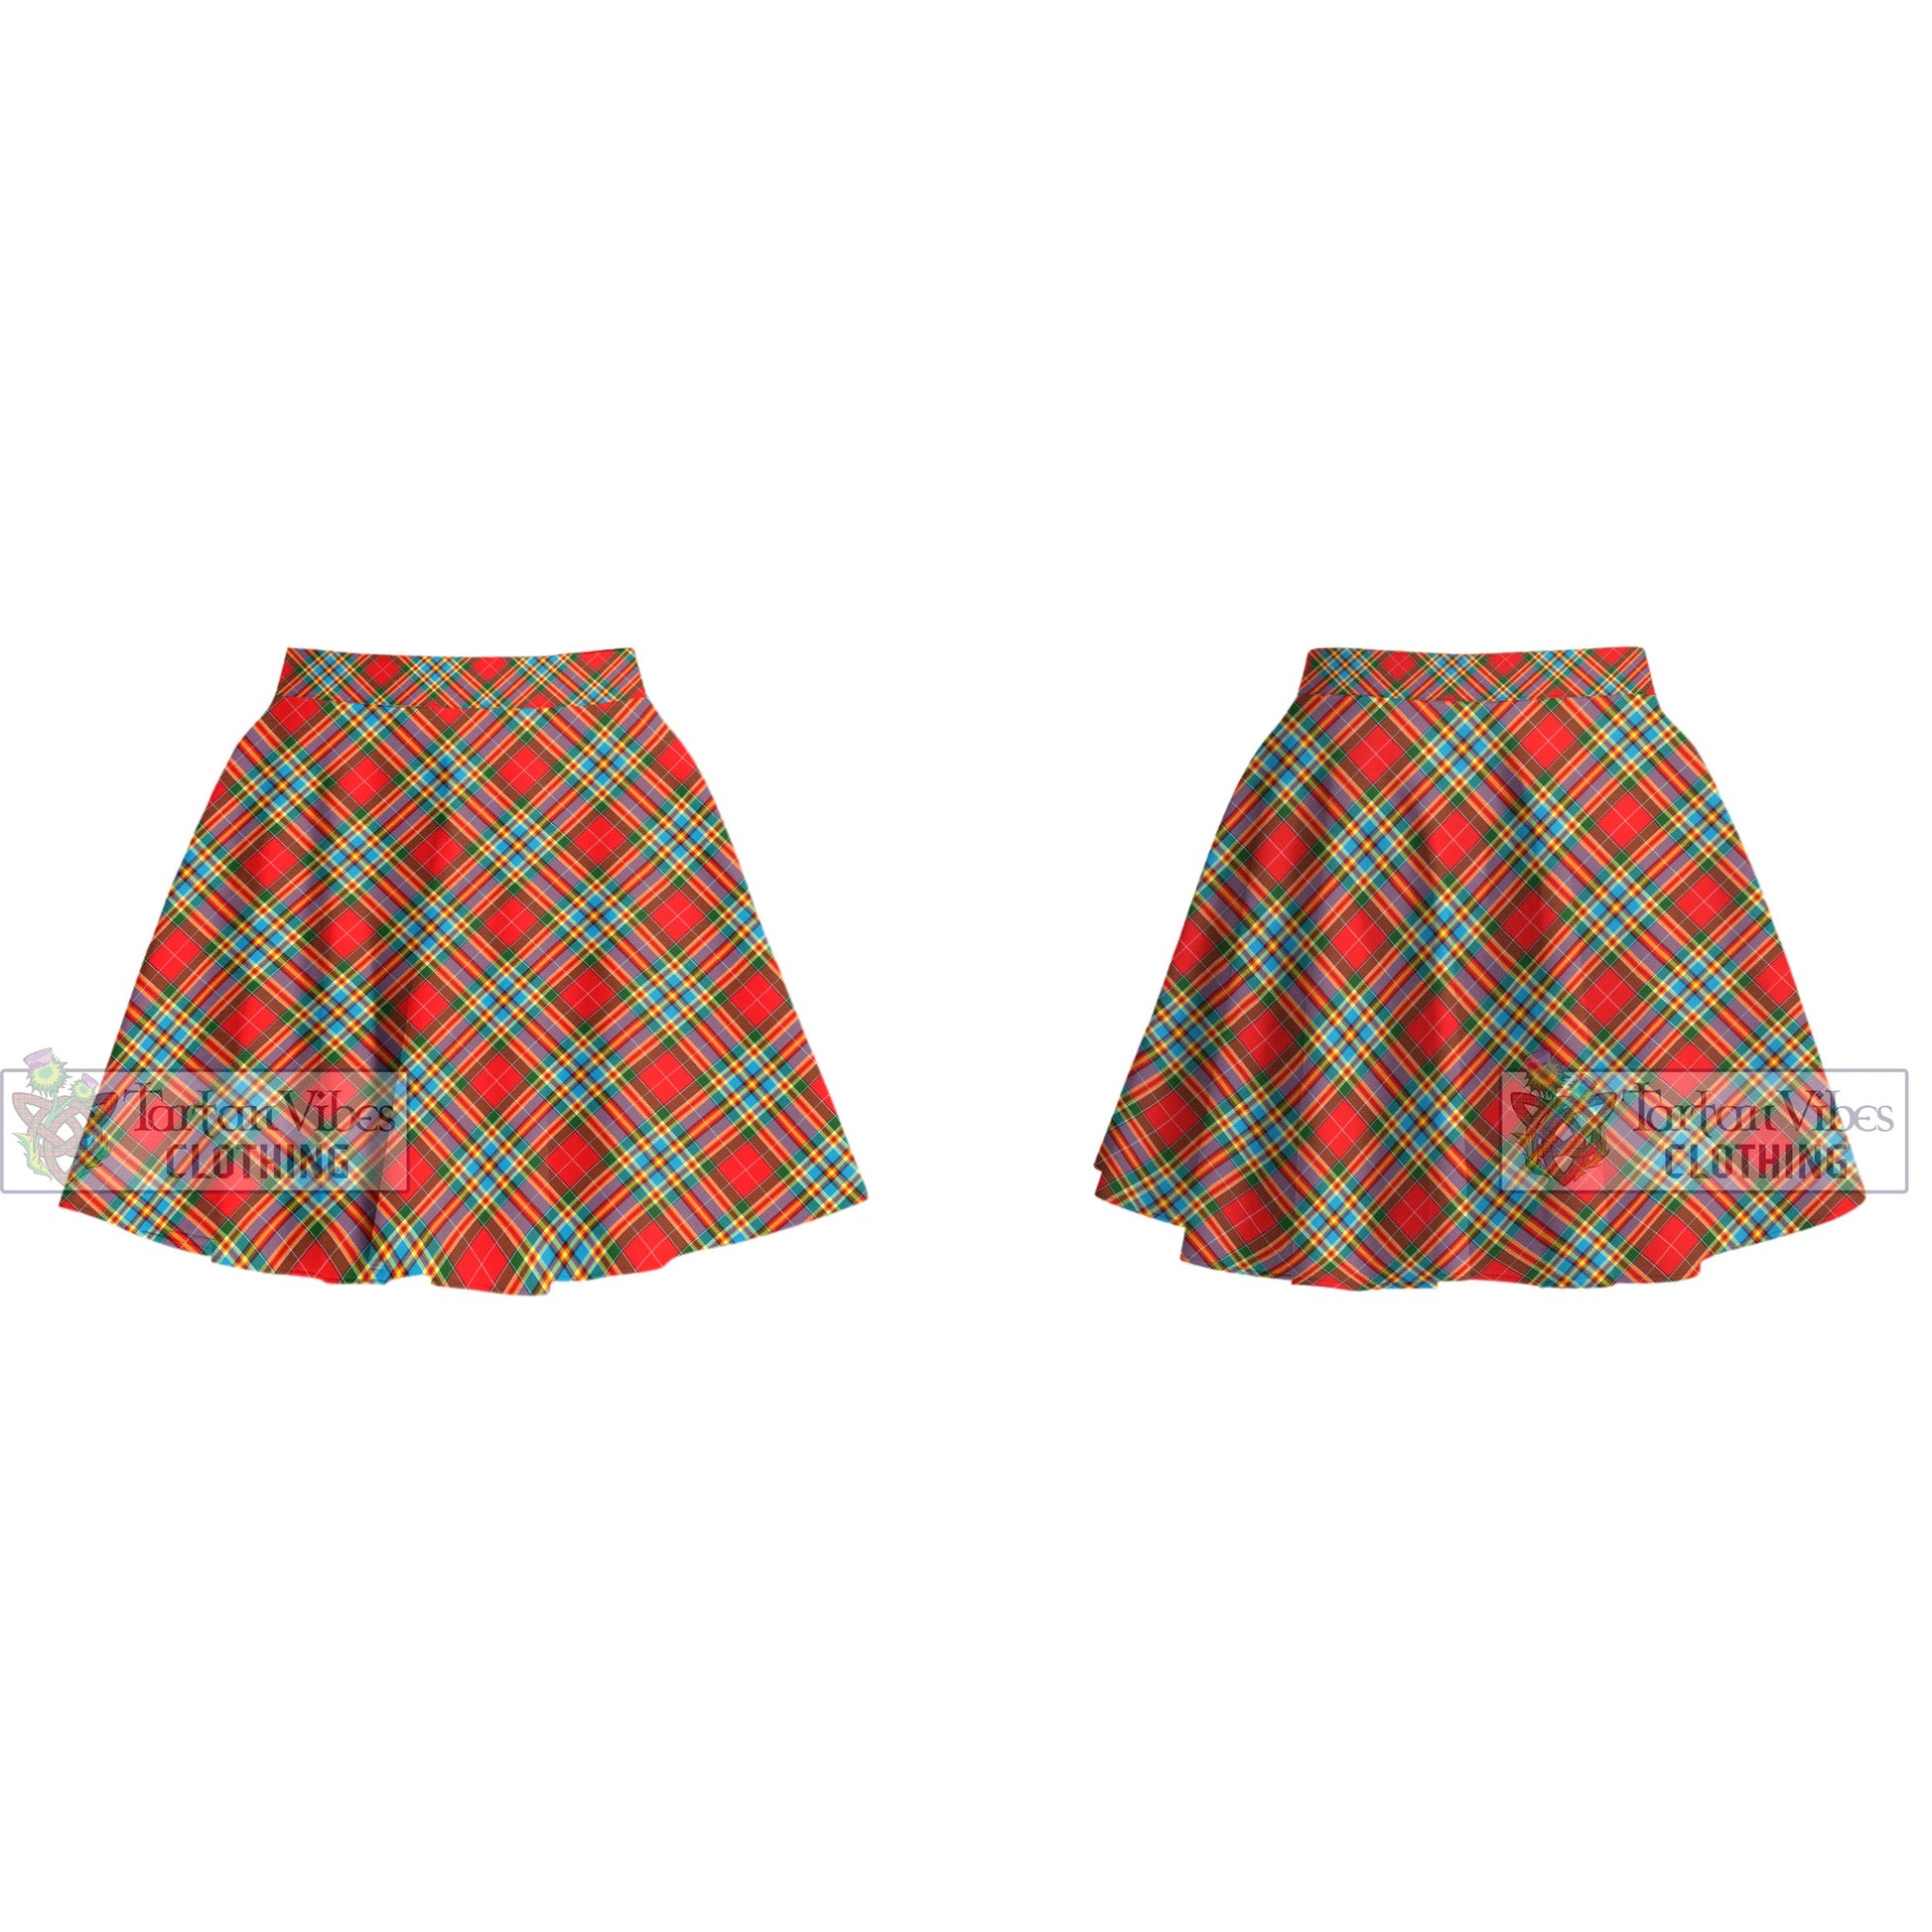 Tartan Vibes Clothing Chattan Tartan Women's Plated Mini Skirt